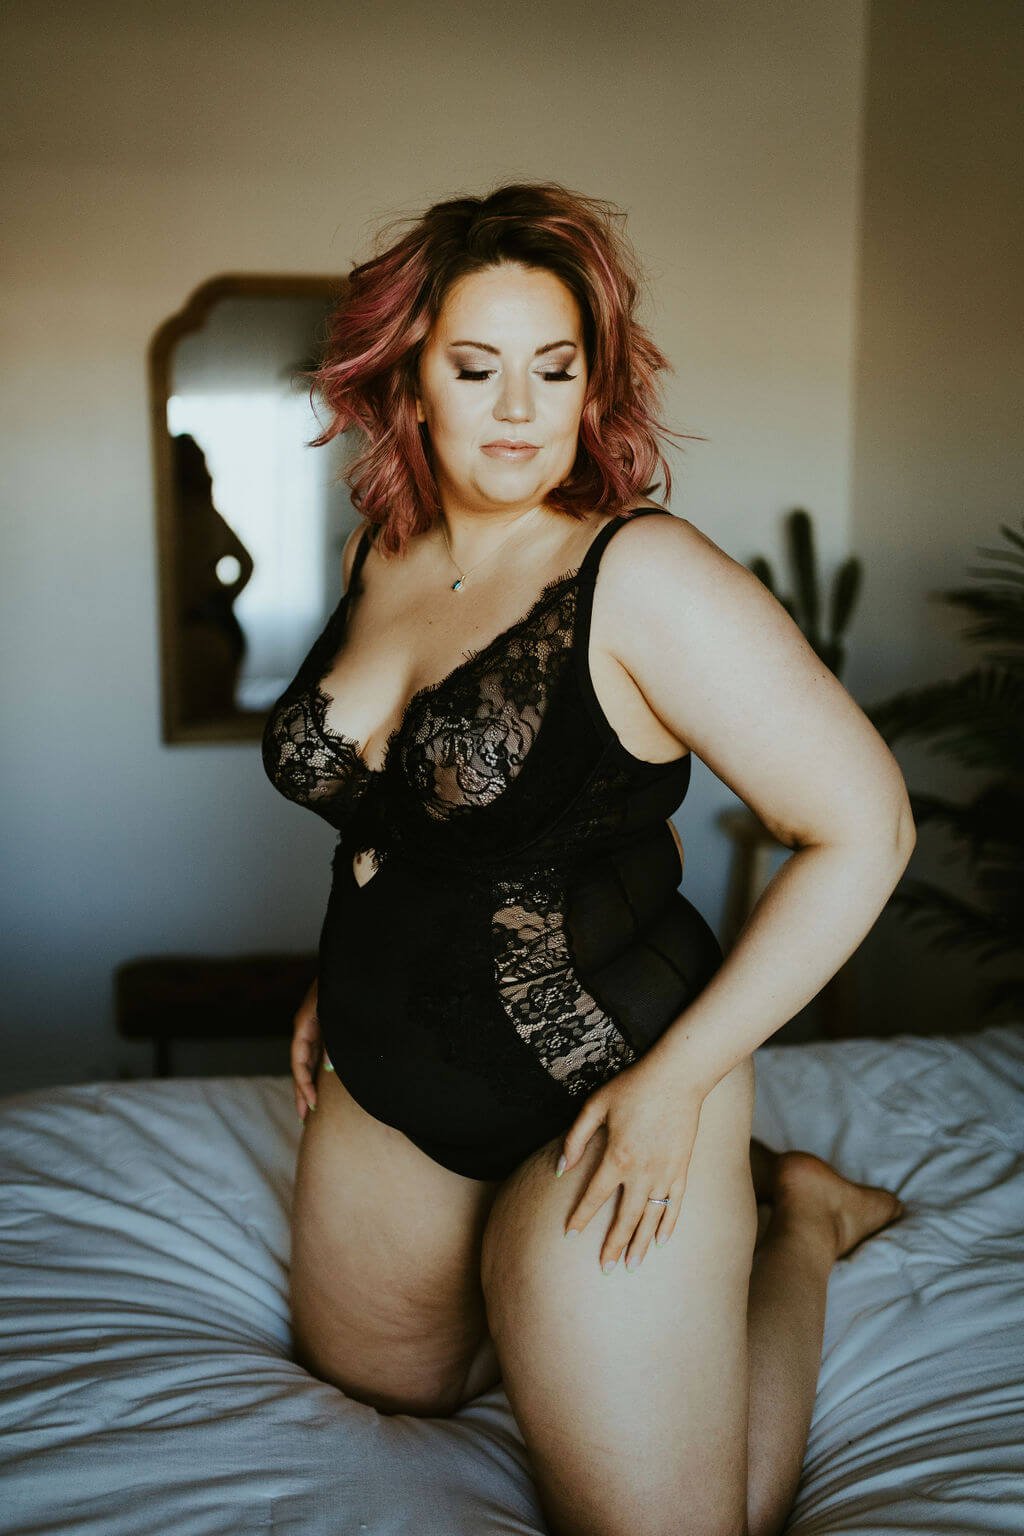 Woman in black lingerie Valentine's Day boudoir photoshoot